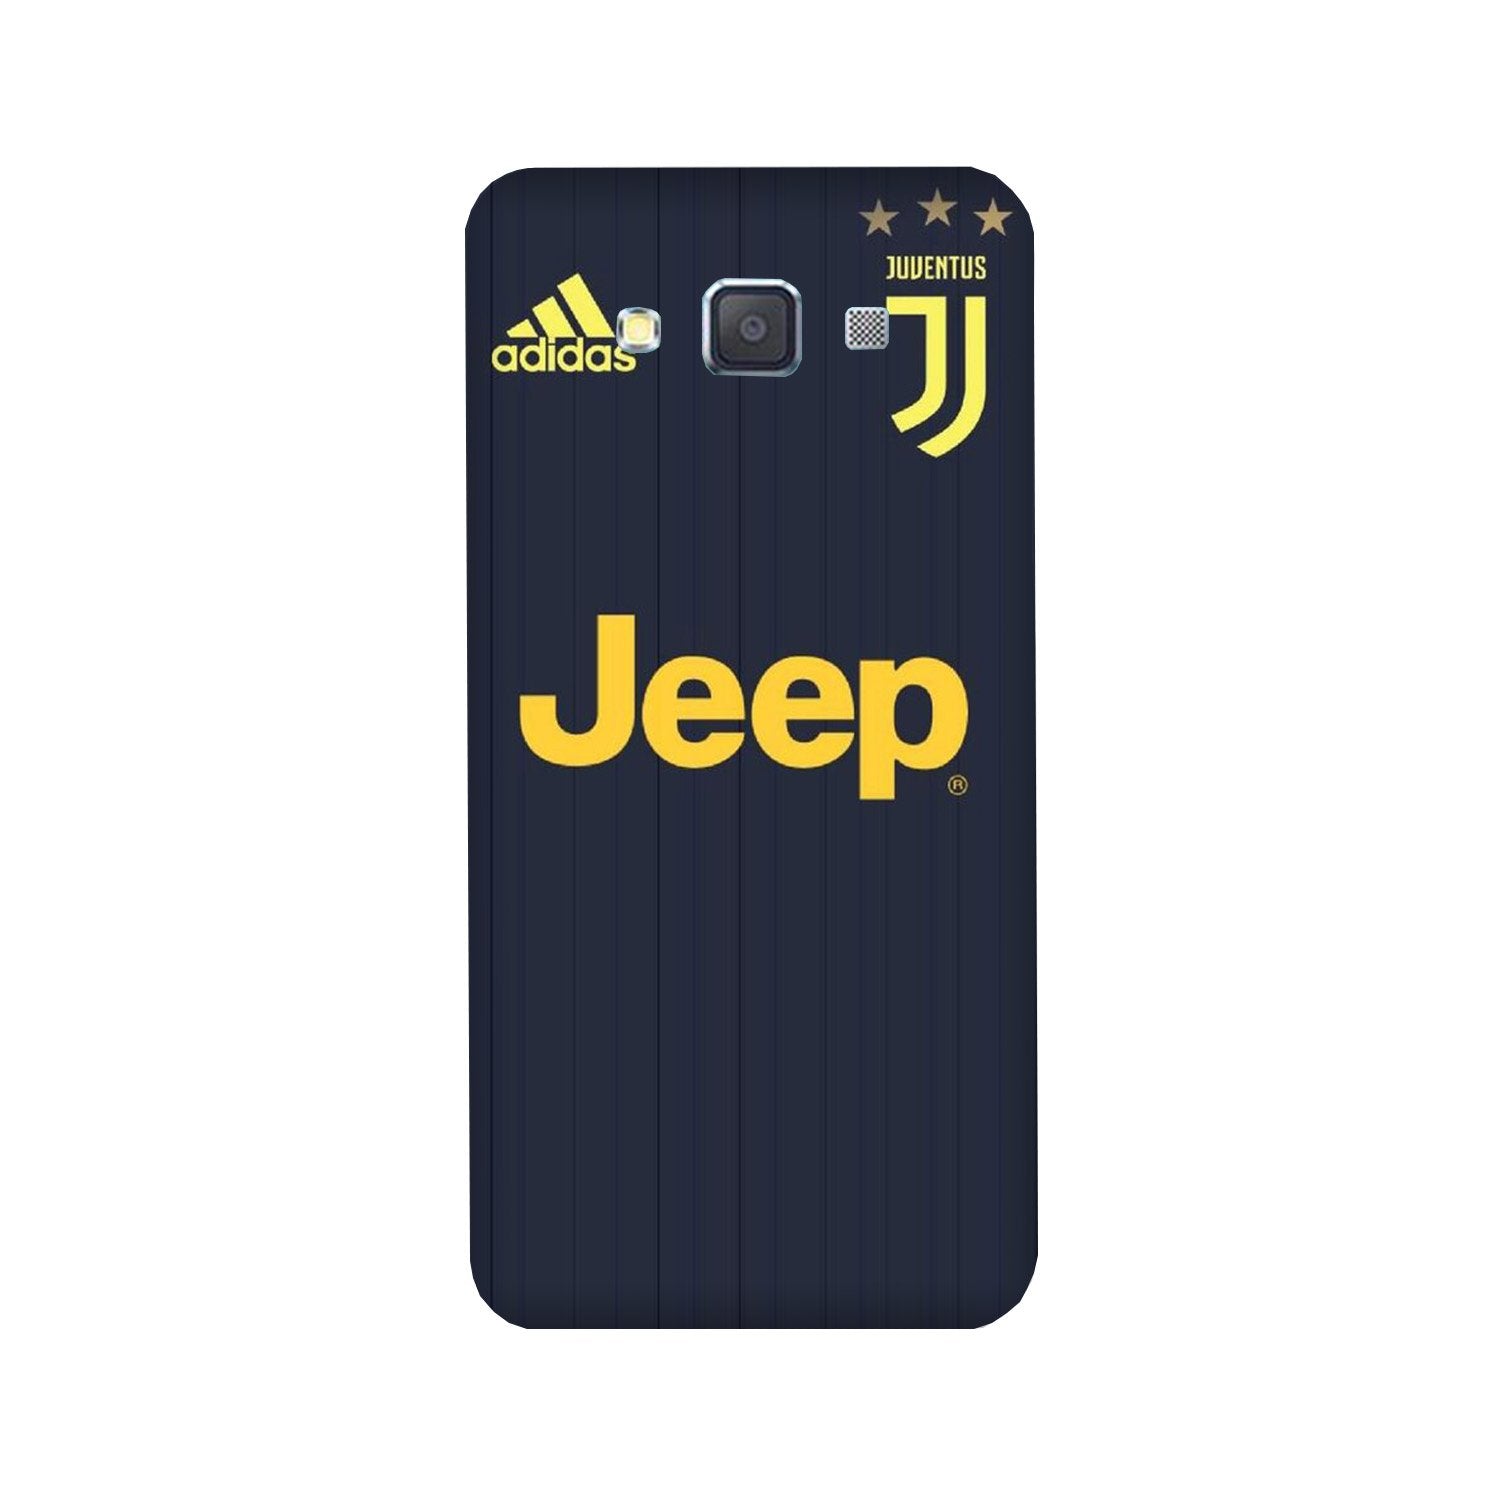 Jeep Juventus Case for Galaxy J7 (2016)(Design - 161)